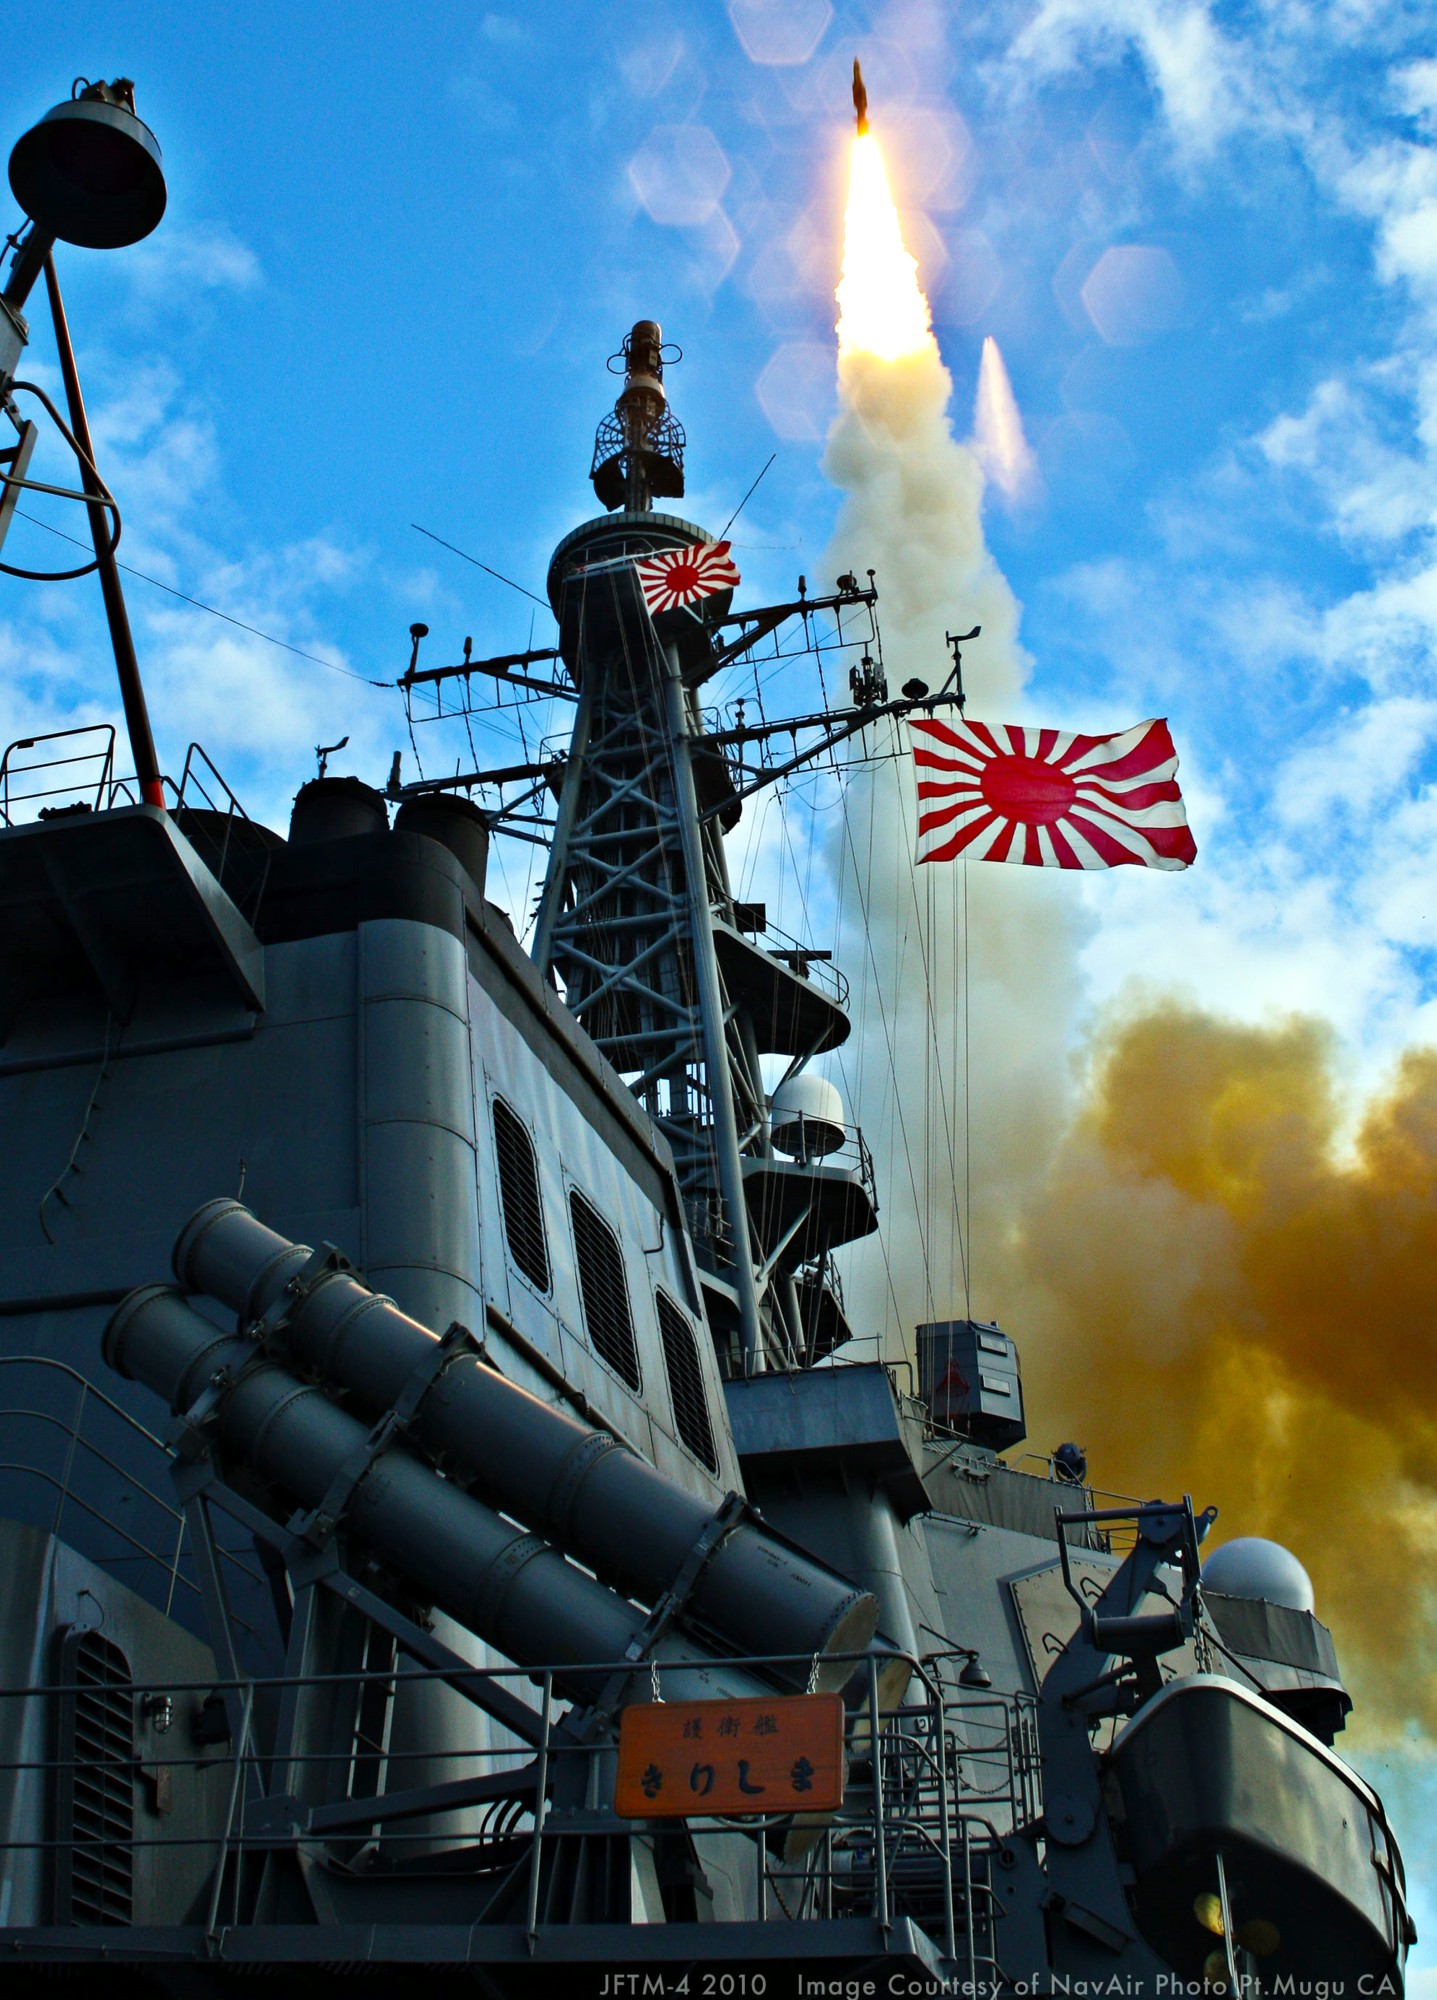 ddg-174 js kirishima kongo class guided missile destroyer aegis japan maritime self defense force jmsdf standard sm-3 rim-161 20